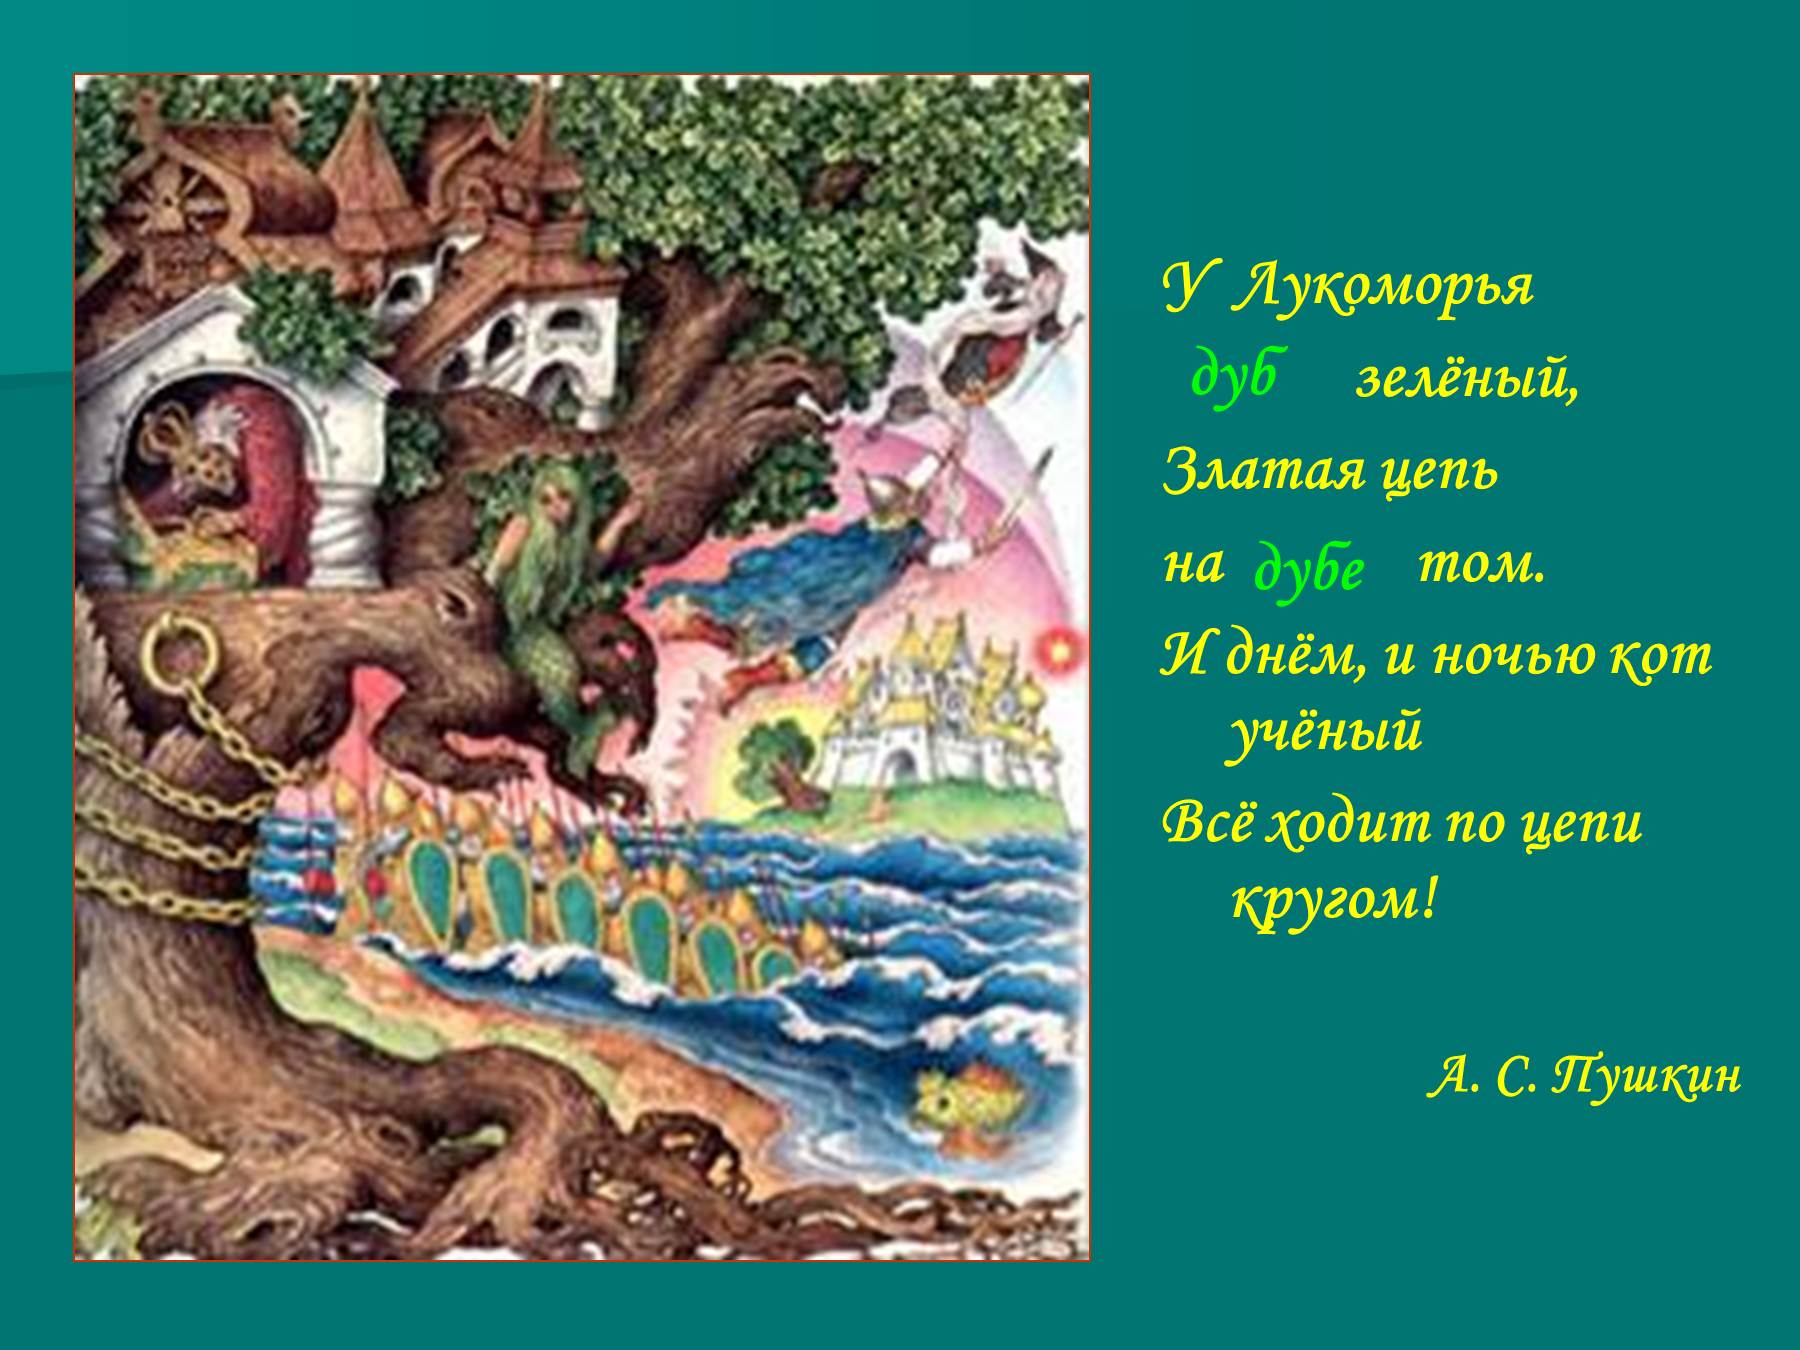 Пушкин у Лукоморья дуб зеленый златая цепь на